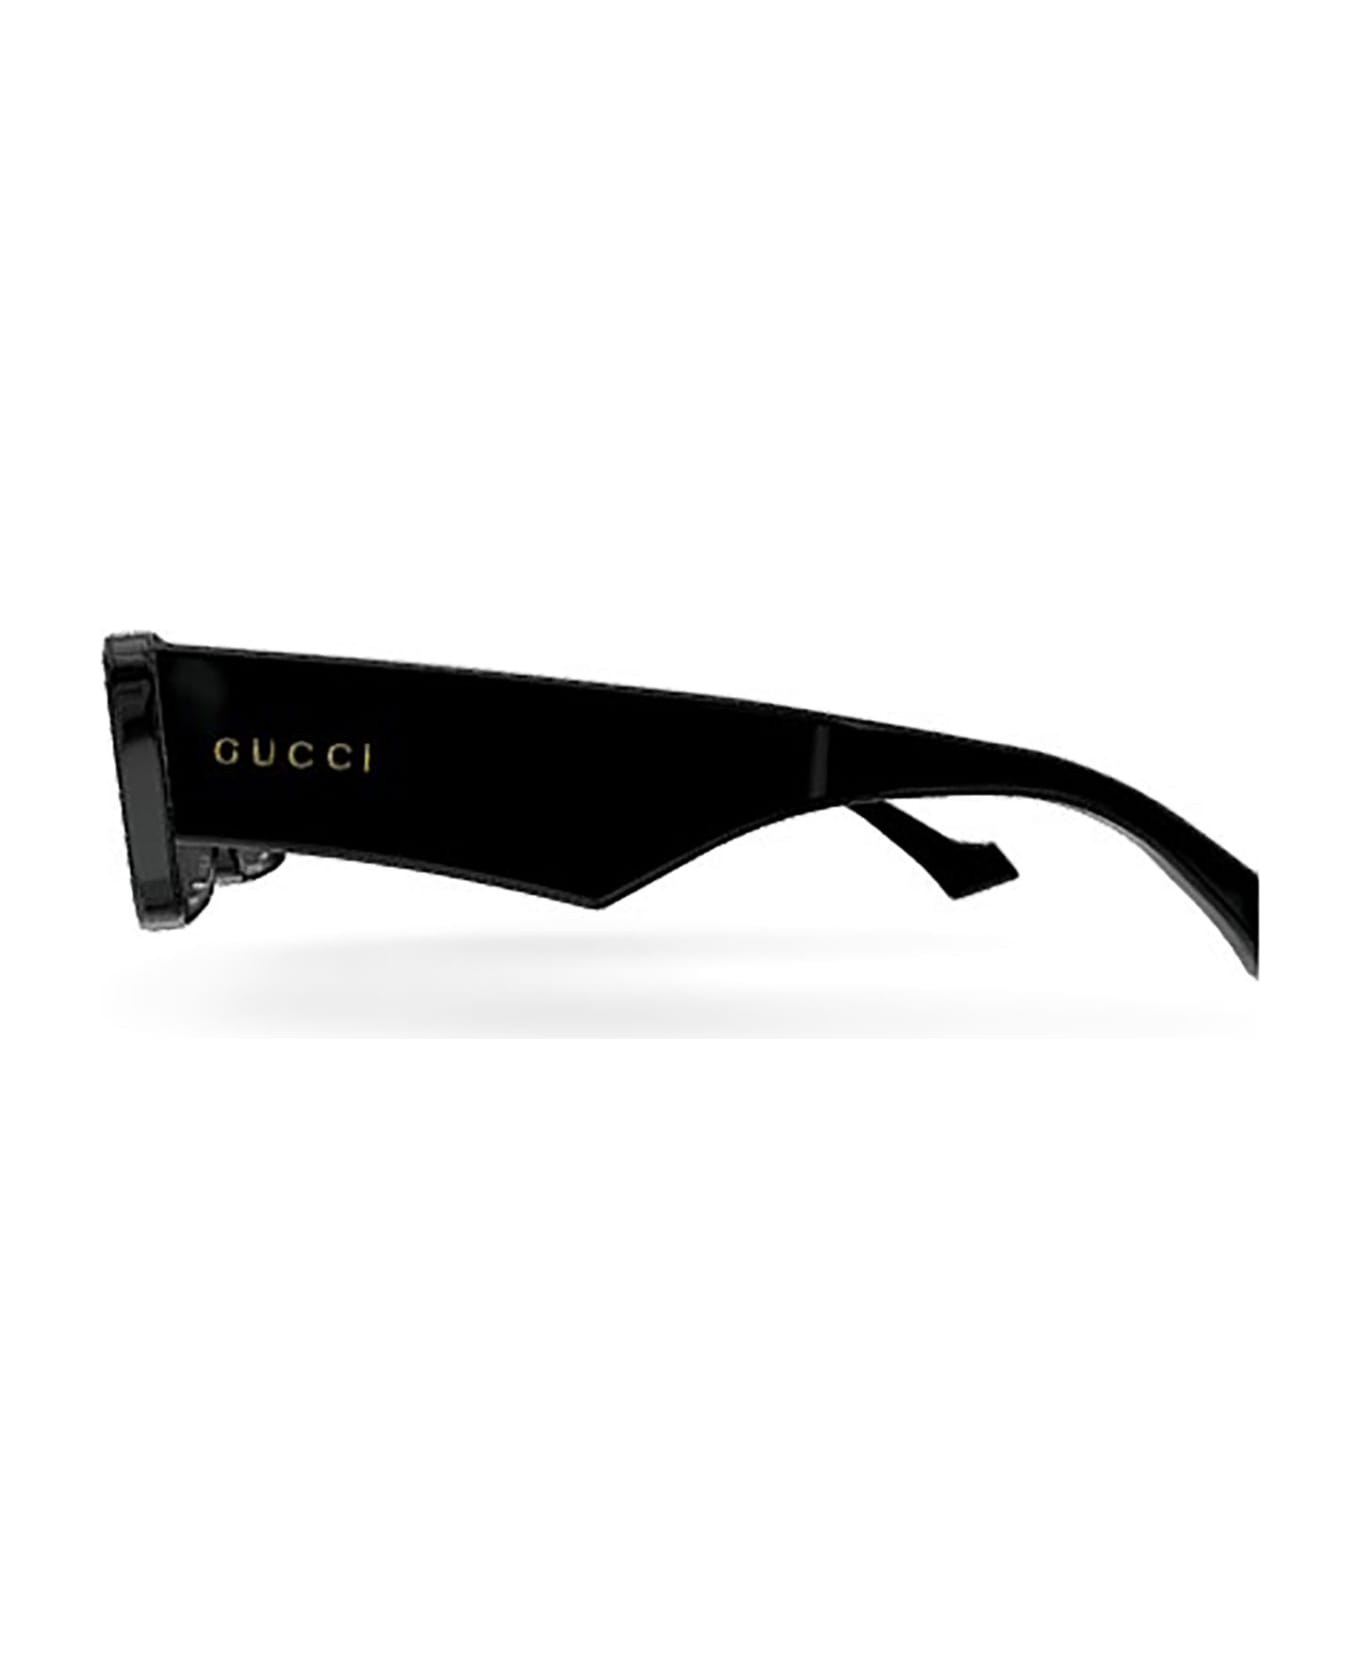 Gucci Eyewear Gg1331s Sunglasses - 002 black black brown